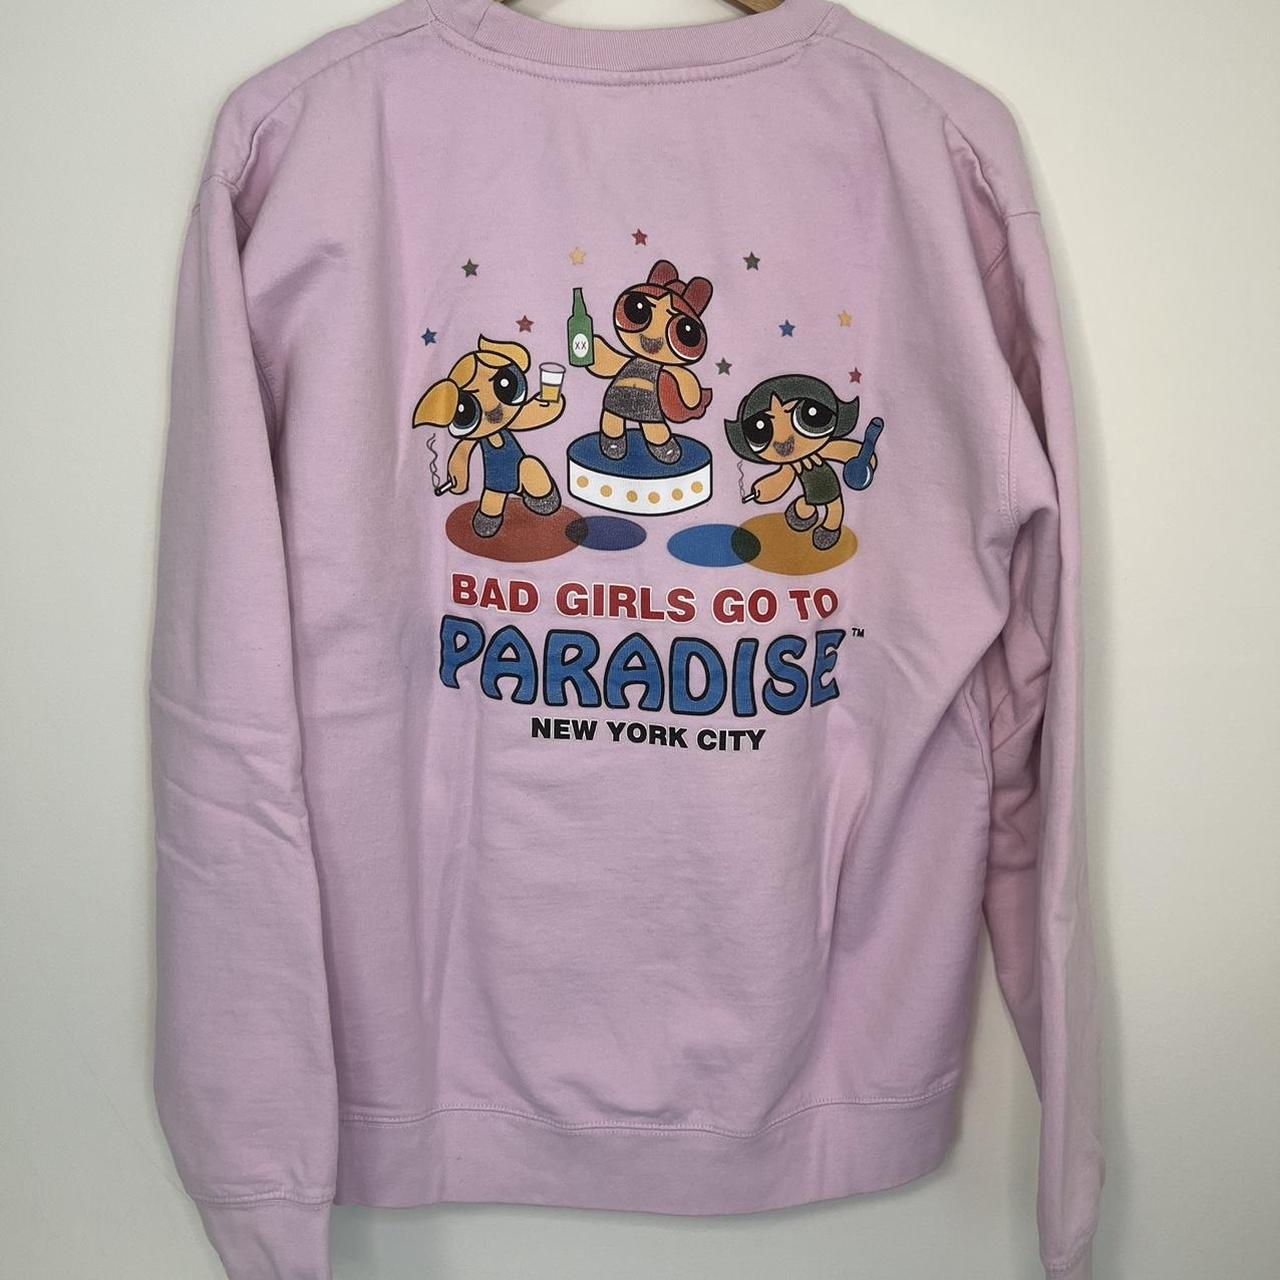 Product Image 2 - Paradise NYC Crewneck Sweatshirt
Preloved- 7/10